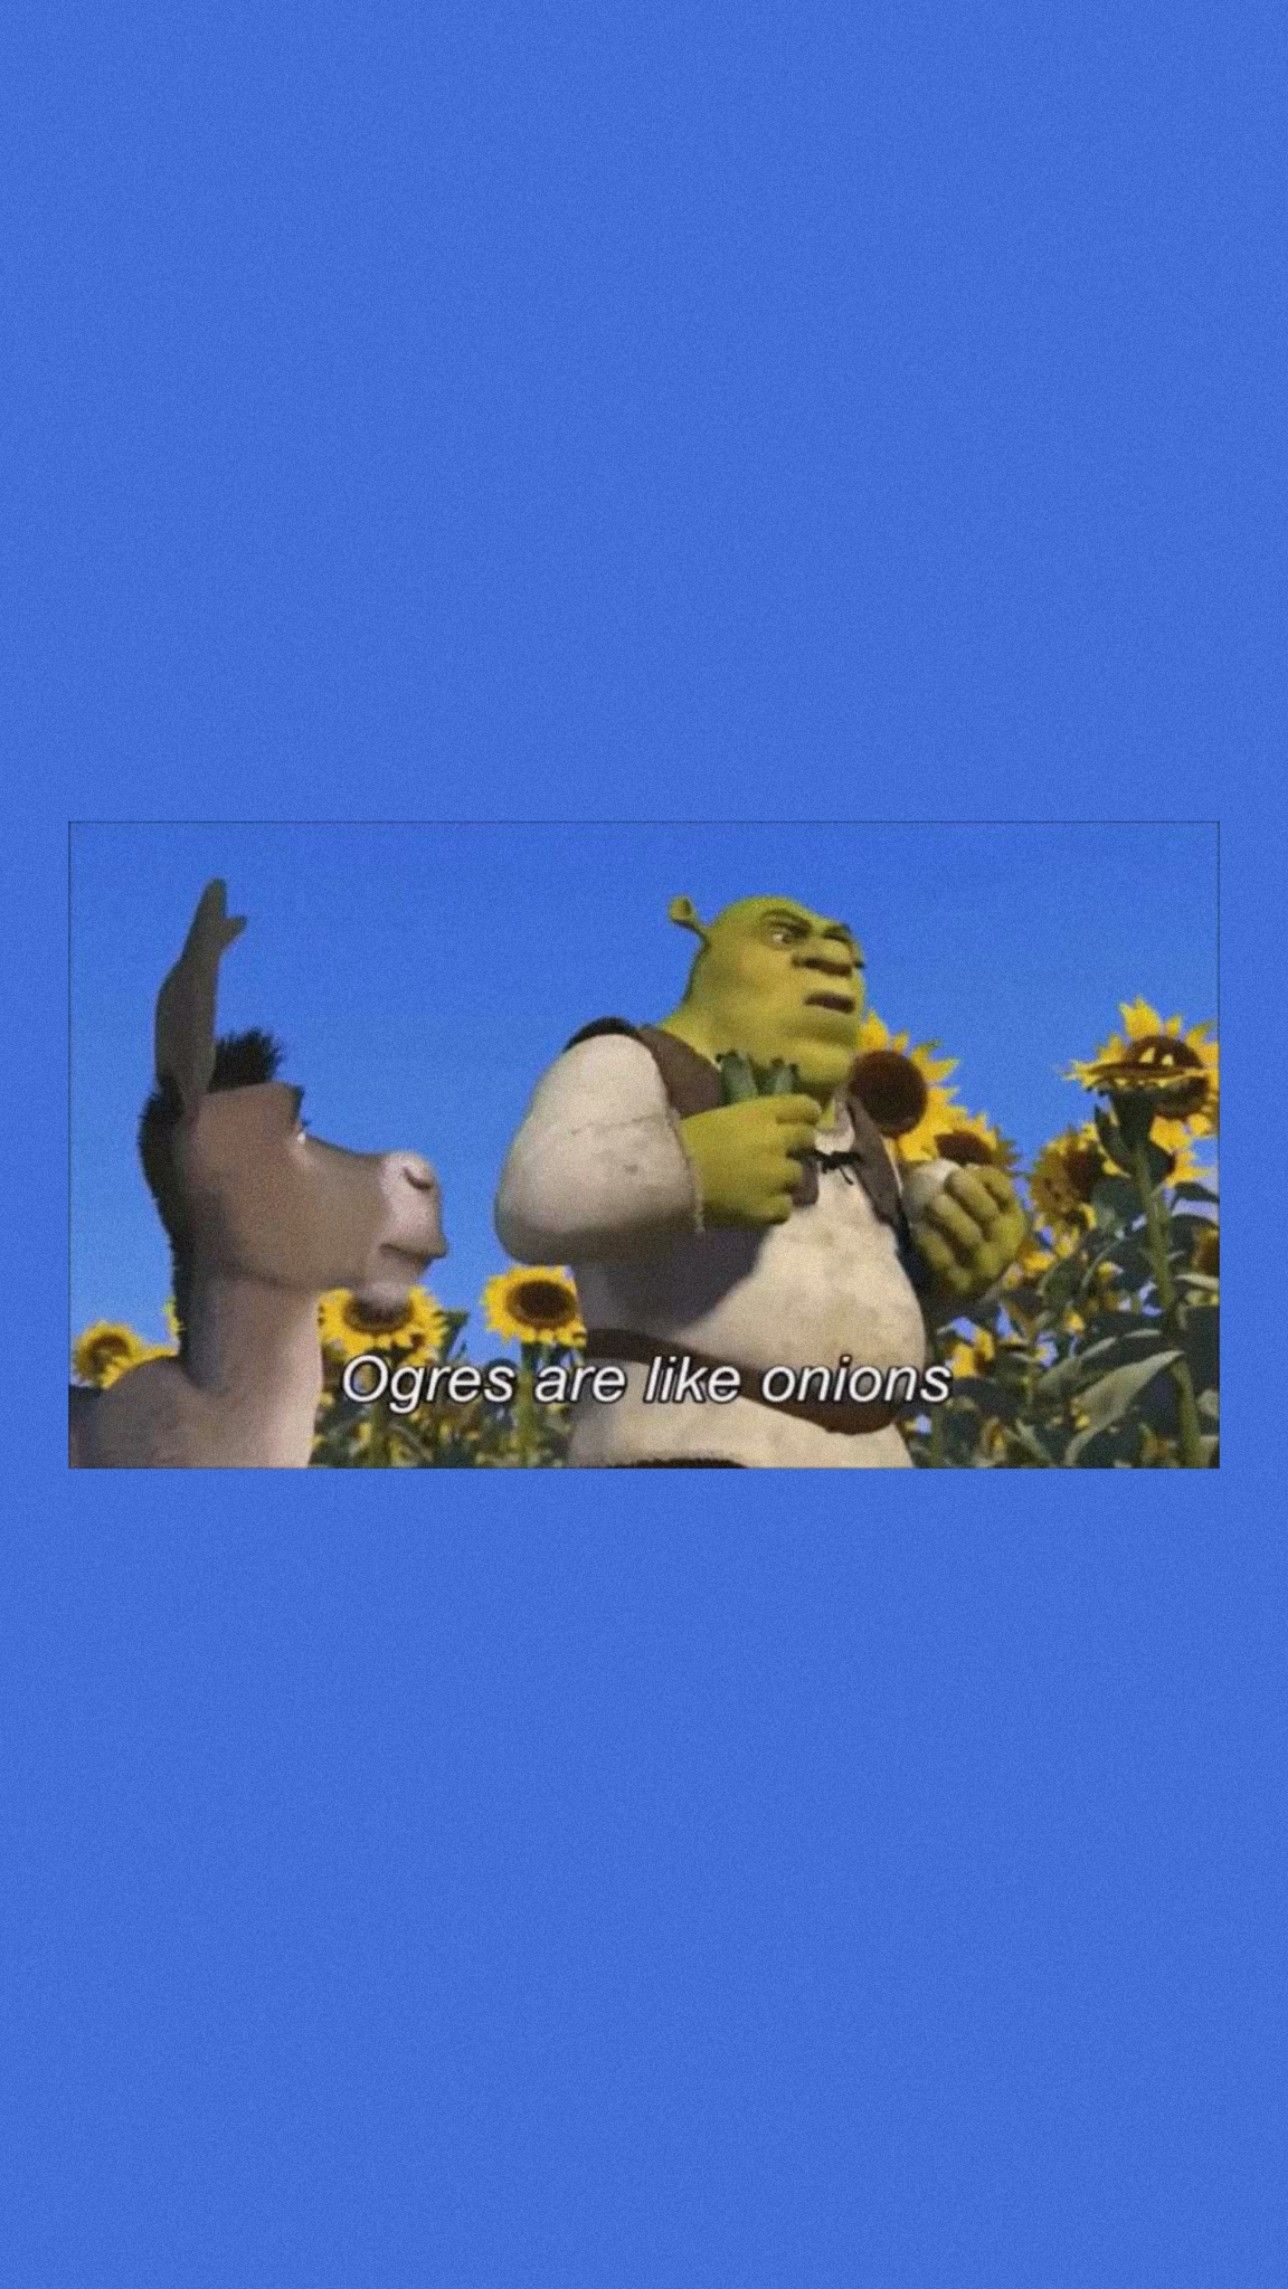 Shrek eating a sunflower with the caption 